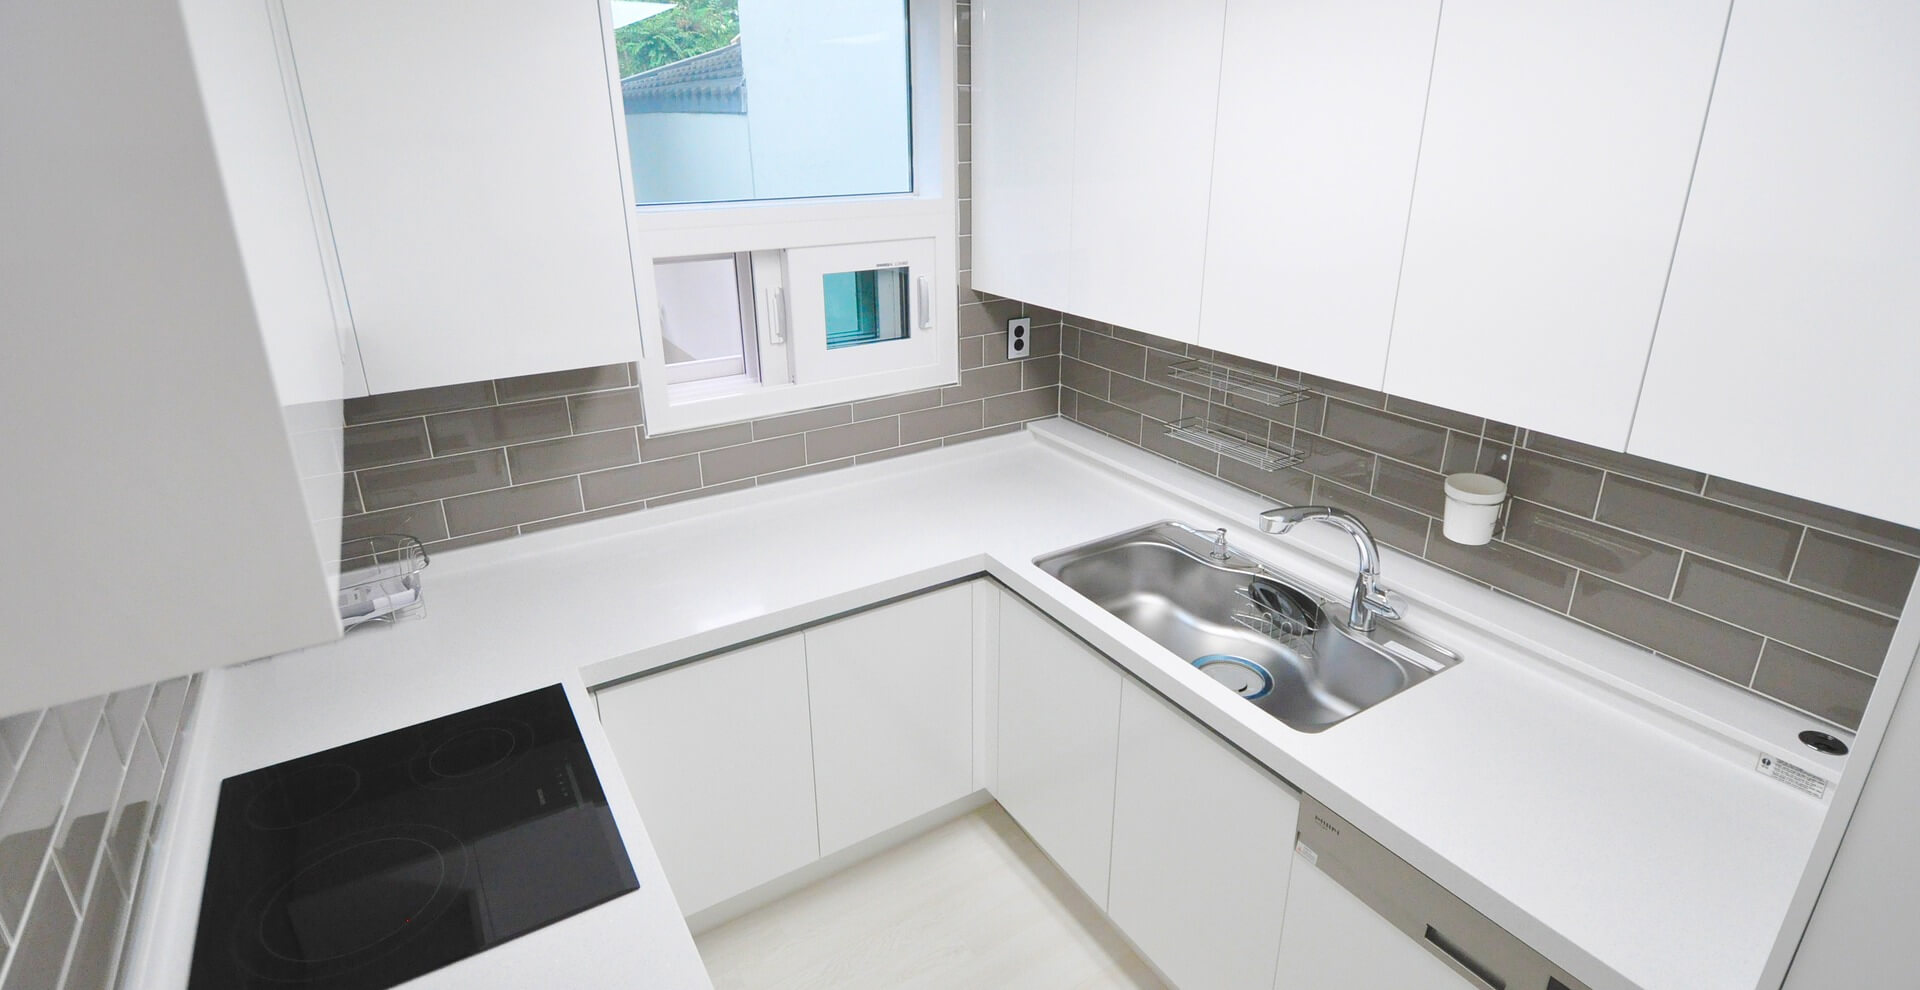 Kitchen Design-SoFlo Kitchen Remodeling & Custom Cabinet Installation - backsplashes, flooring, countertops